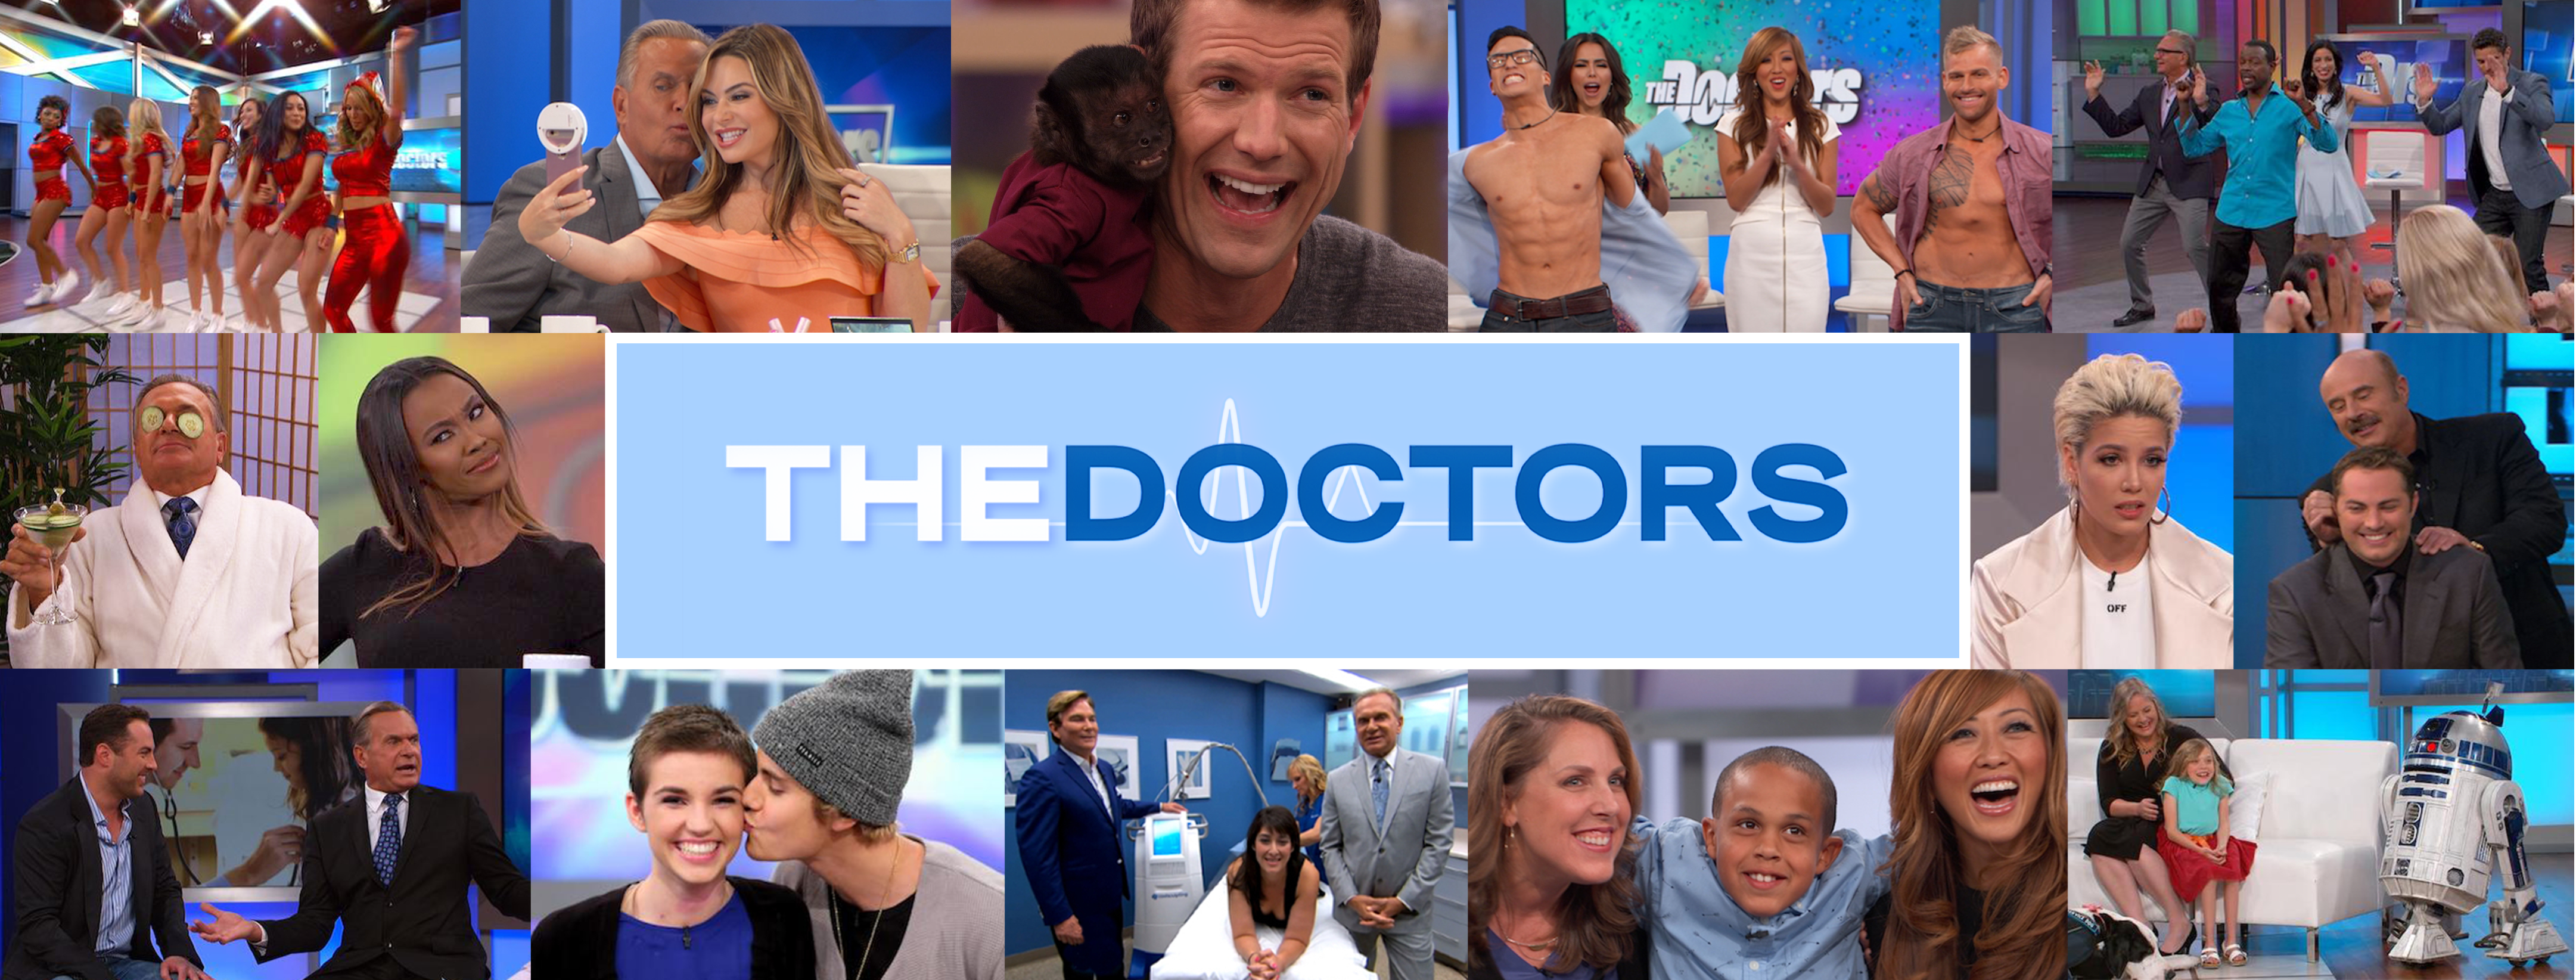 Debbie S Smoking Struggles The Doctors Tv Show